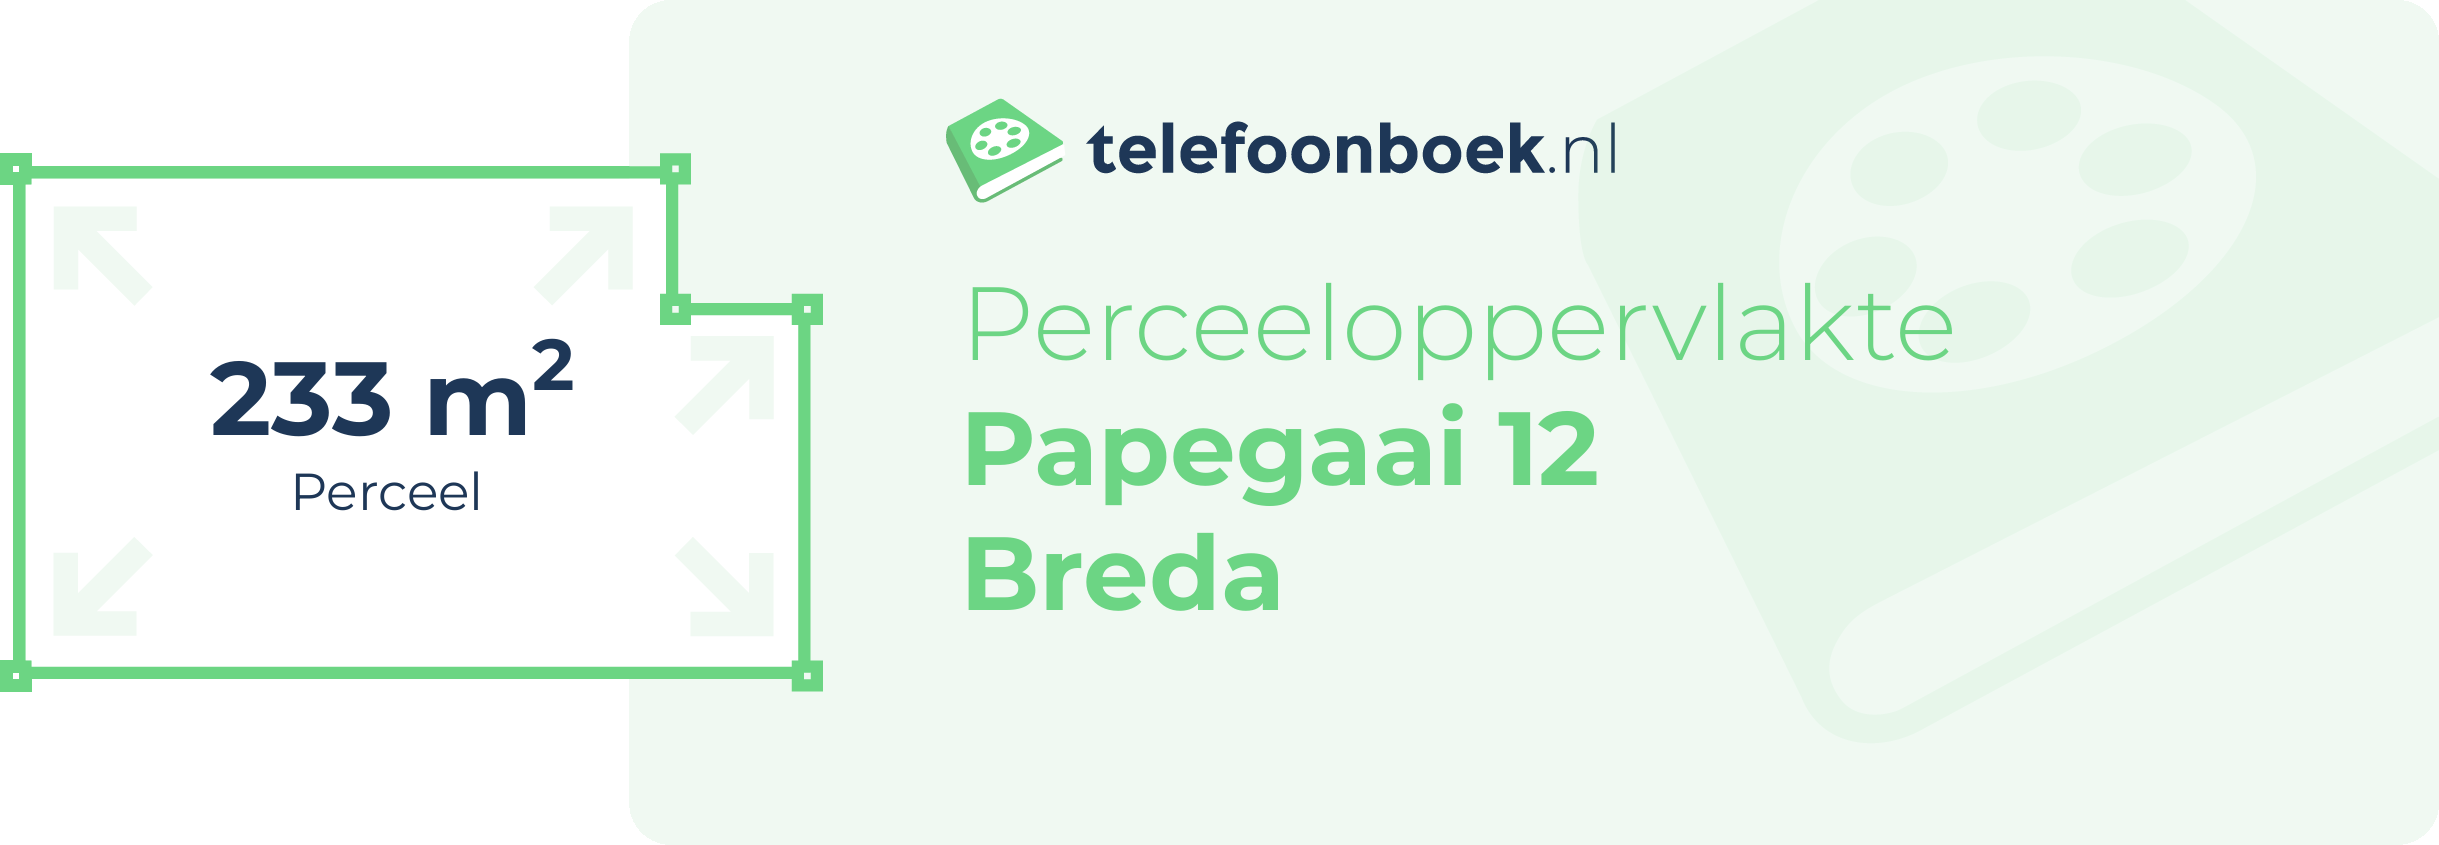 Perceeloppervlakte Papegaai 12 Breda